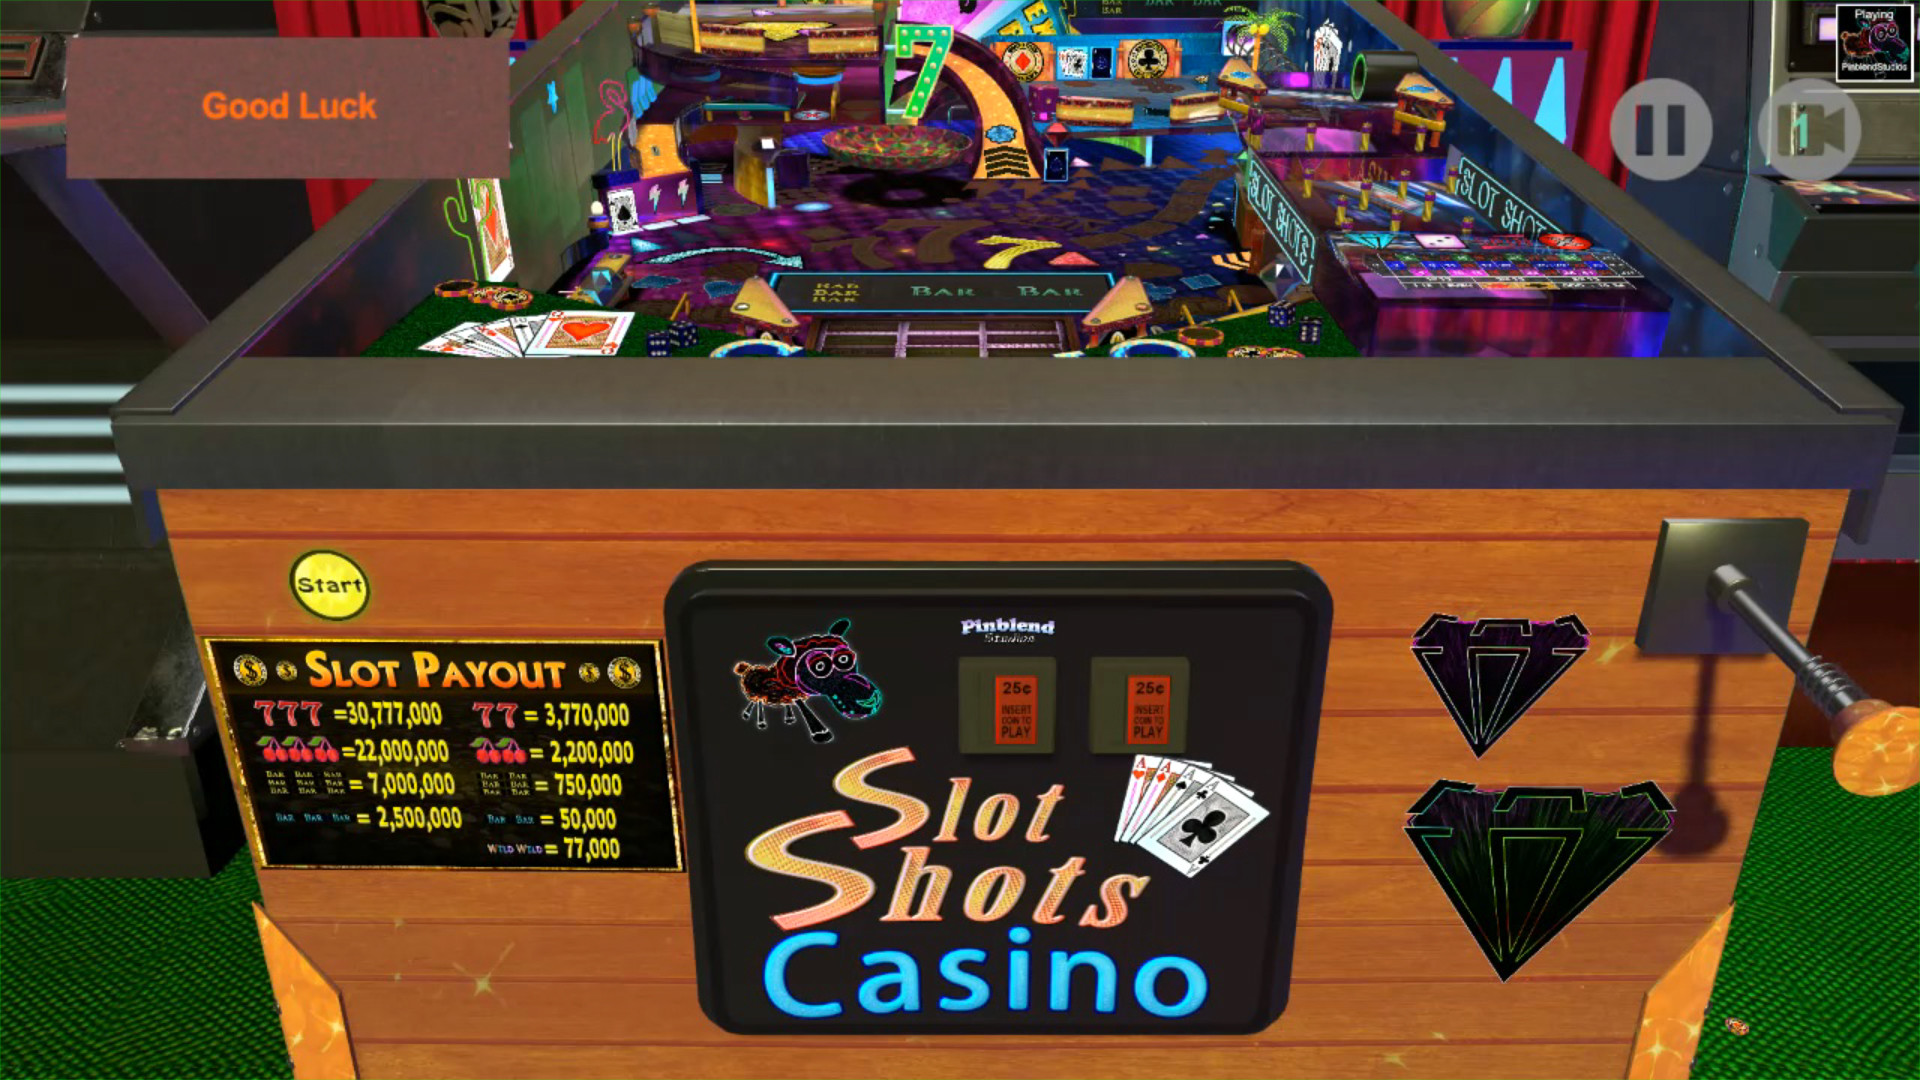 Slot Shots Pinball Collection Steam CD Key